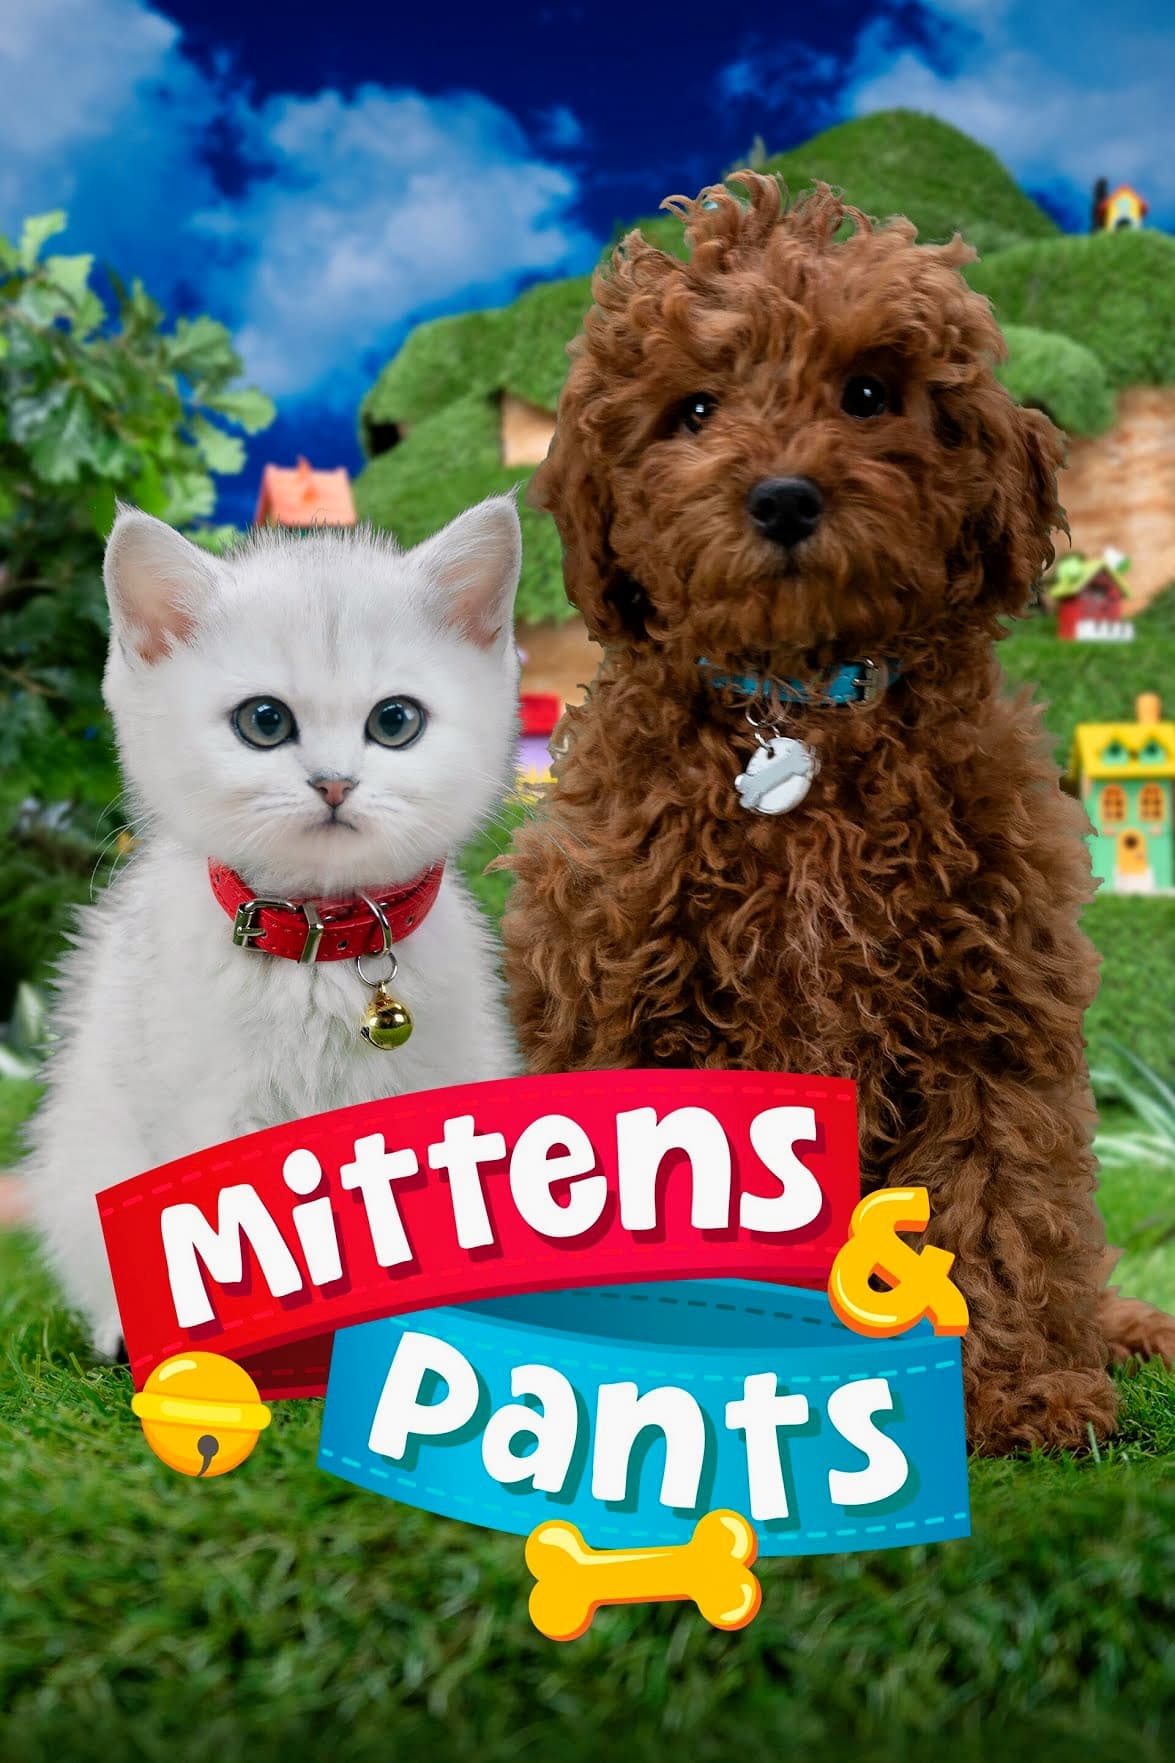 Mittens & Pants